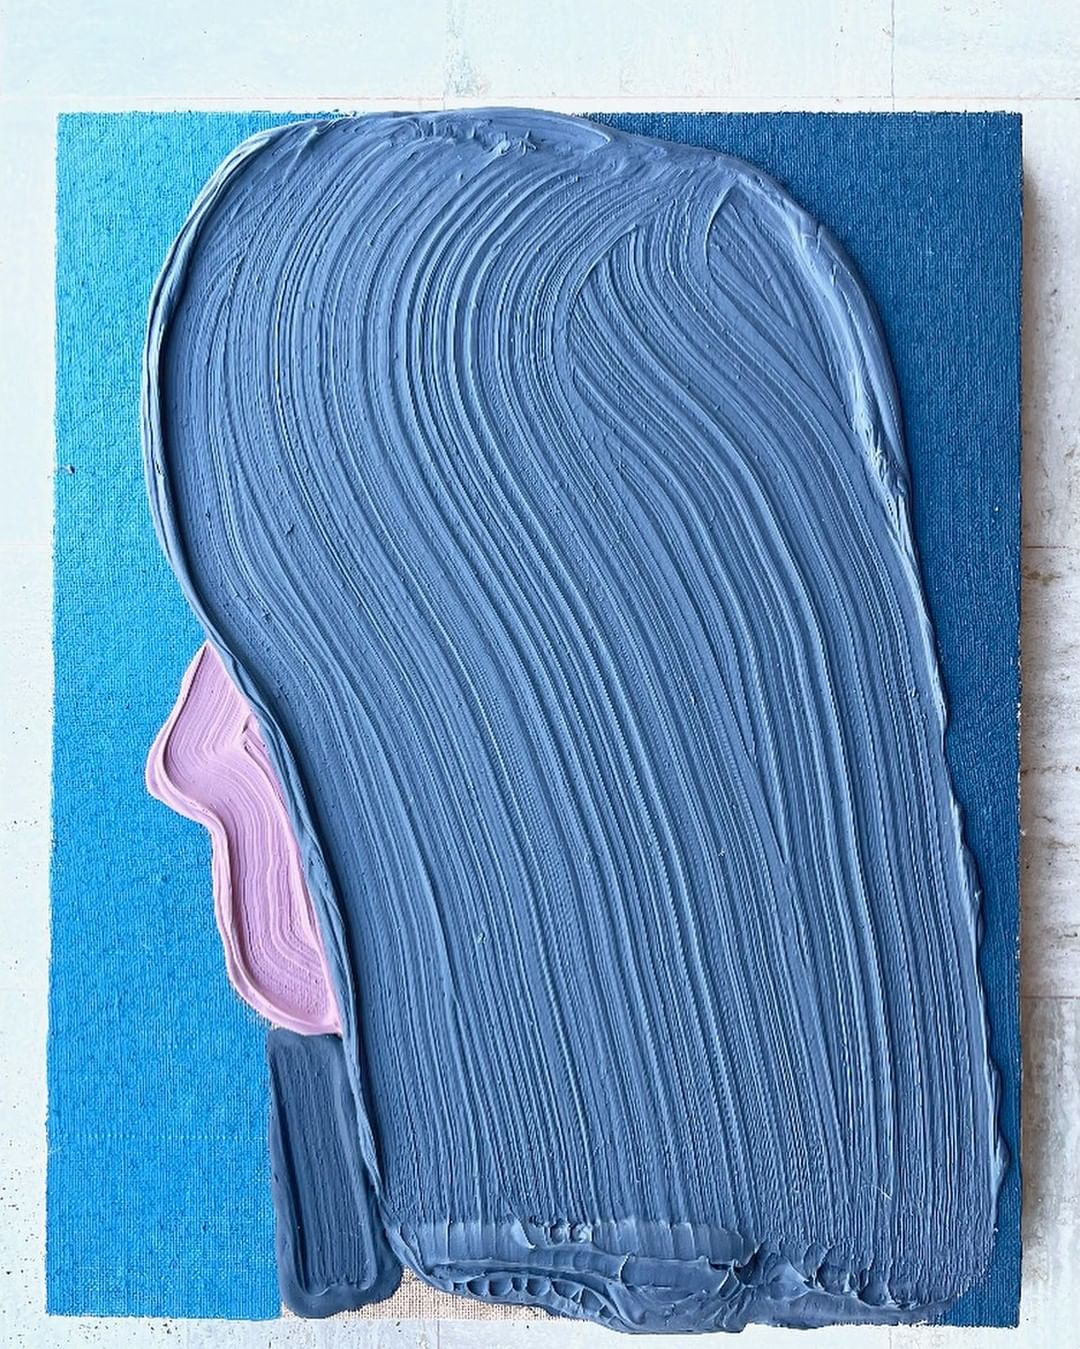 jose lerma retratos empaste mujer pelo azul